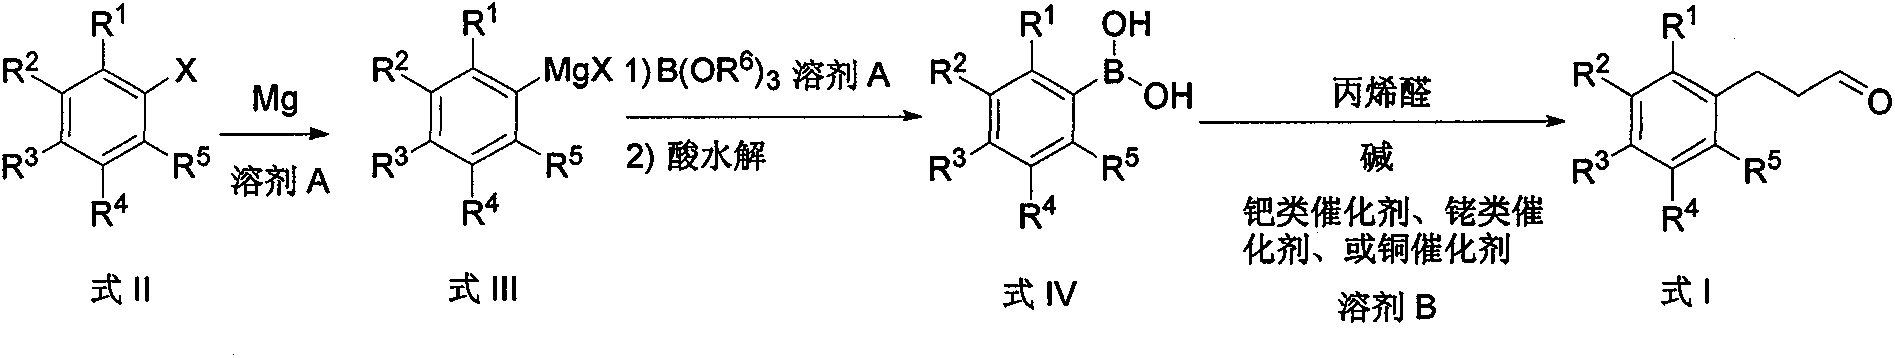 Preparation method of arylpropylaldehyde derivatives